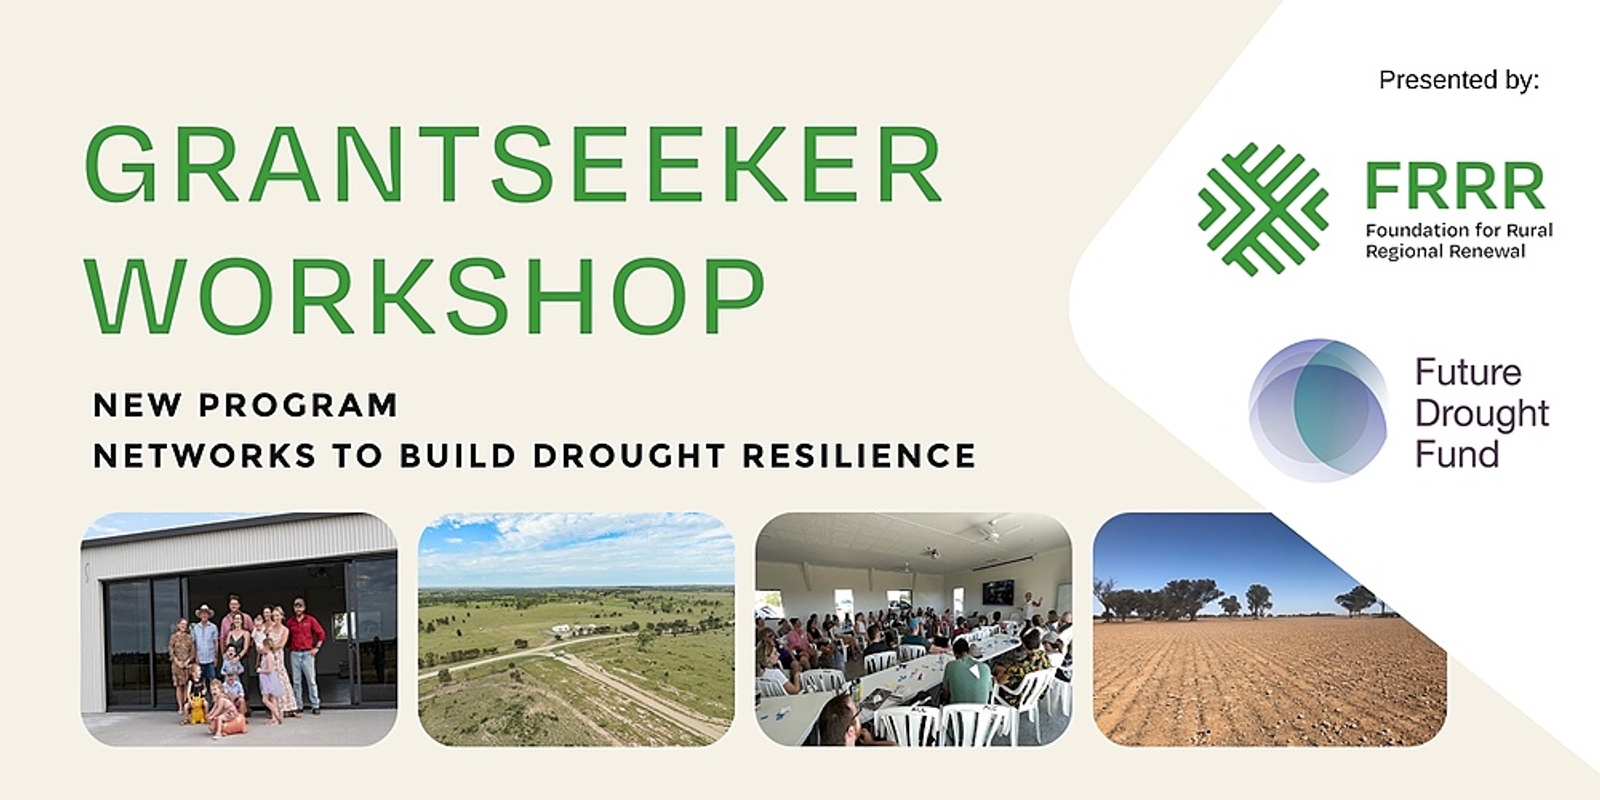 FRRR Grantseeker Workshop - New Program - Networks to Build Drought Resilience 